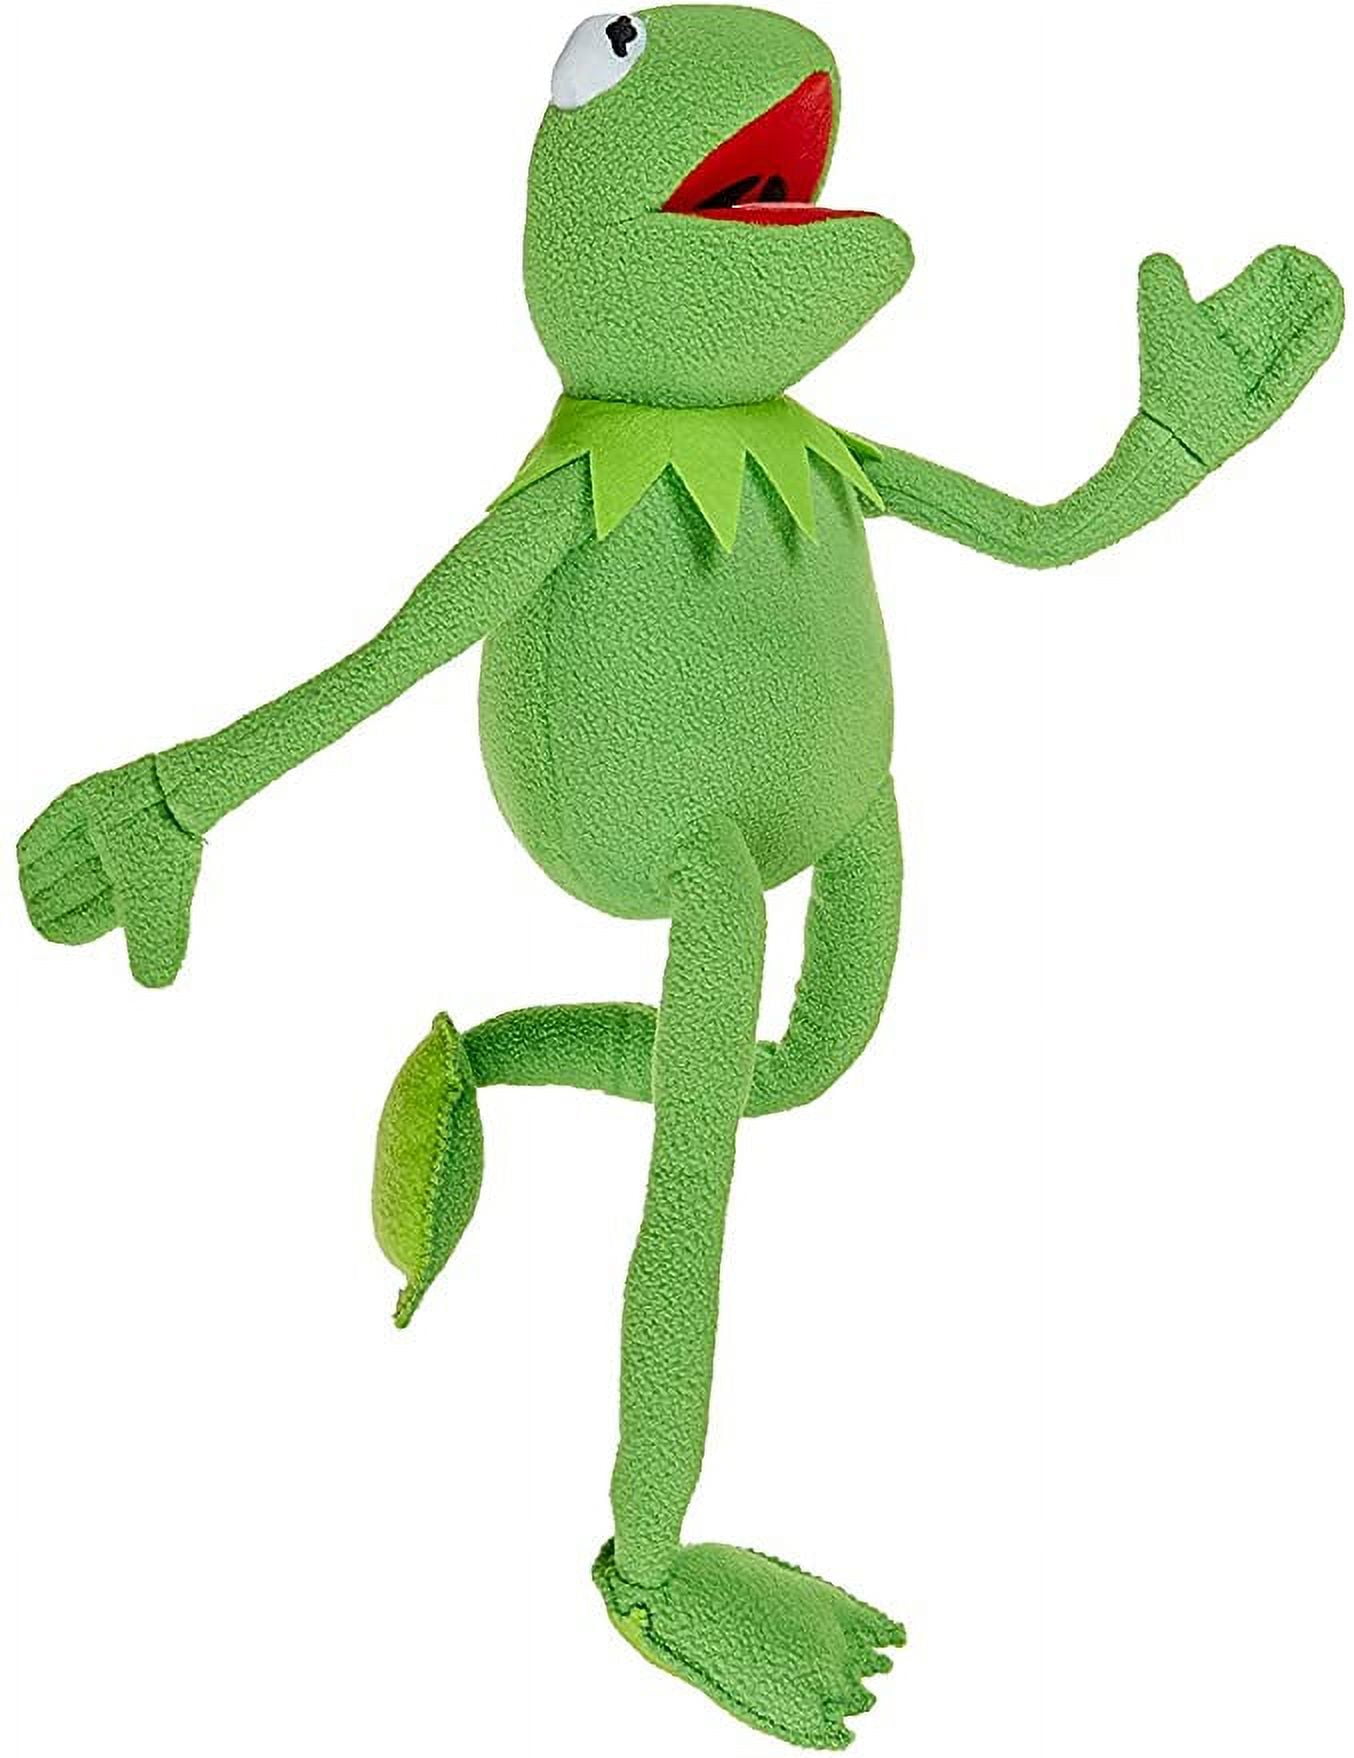 Plush Doll Kermit Frog , The Movie Soft Stuffed Plush Toy, 16 inches(1 pc  40 cm Kermit Plush Toy)